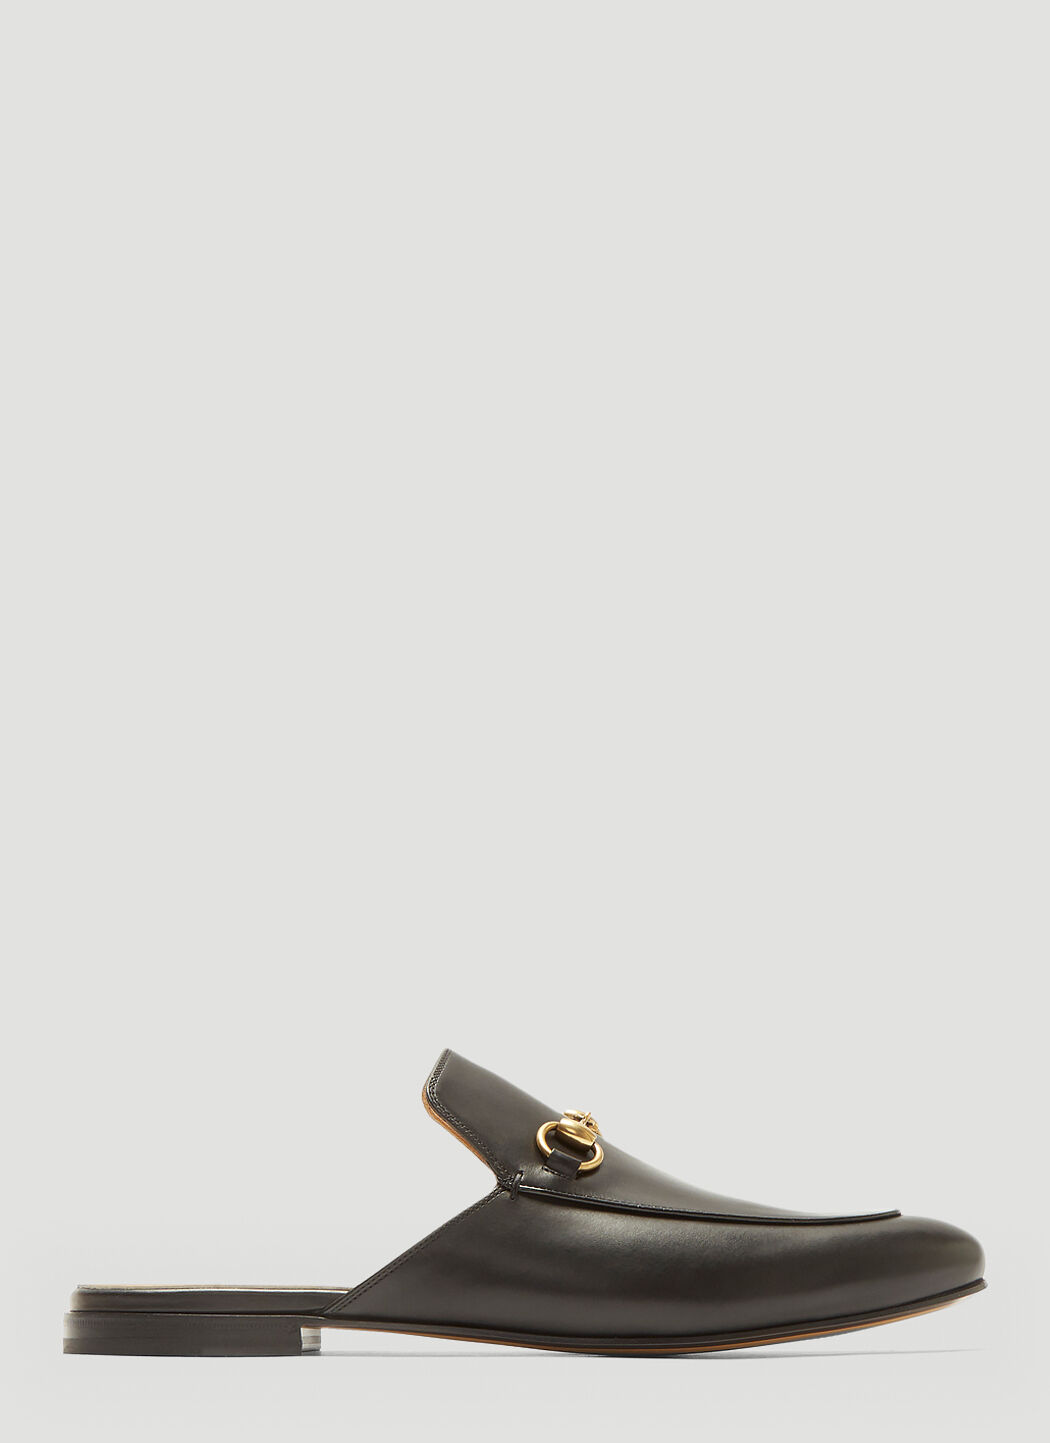 Saint Laurent Horsebit Leather Slipper Shoes ブラック sla0231015